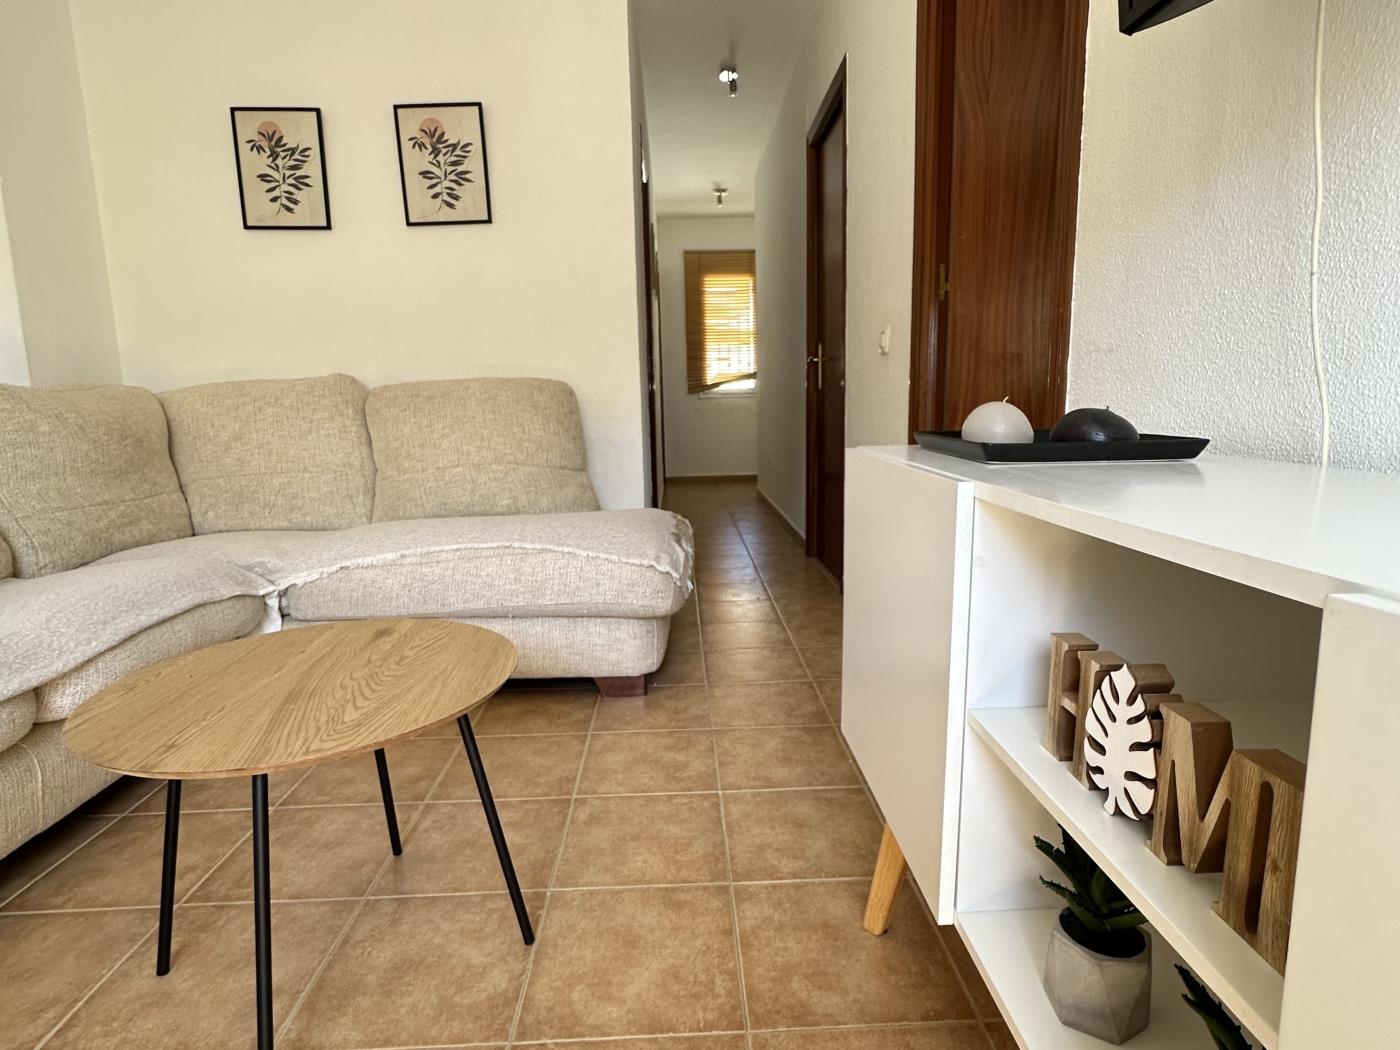 Ref. 27. Two-bedroom apartment on the first floor in Chiclana de la frontera